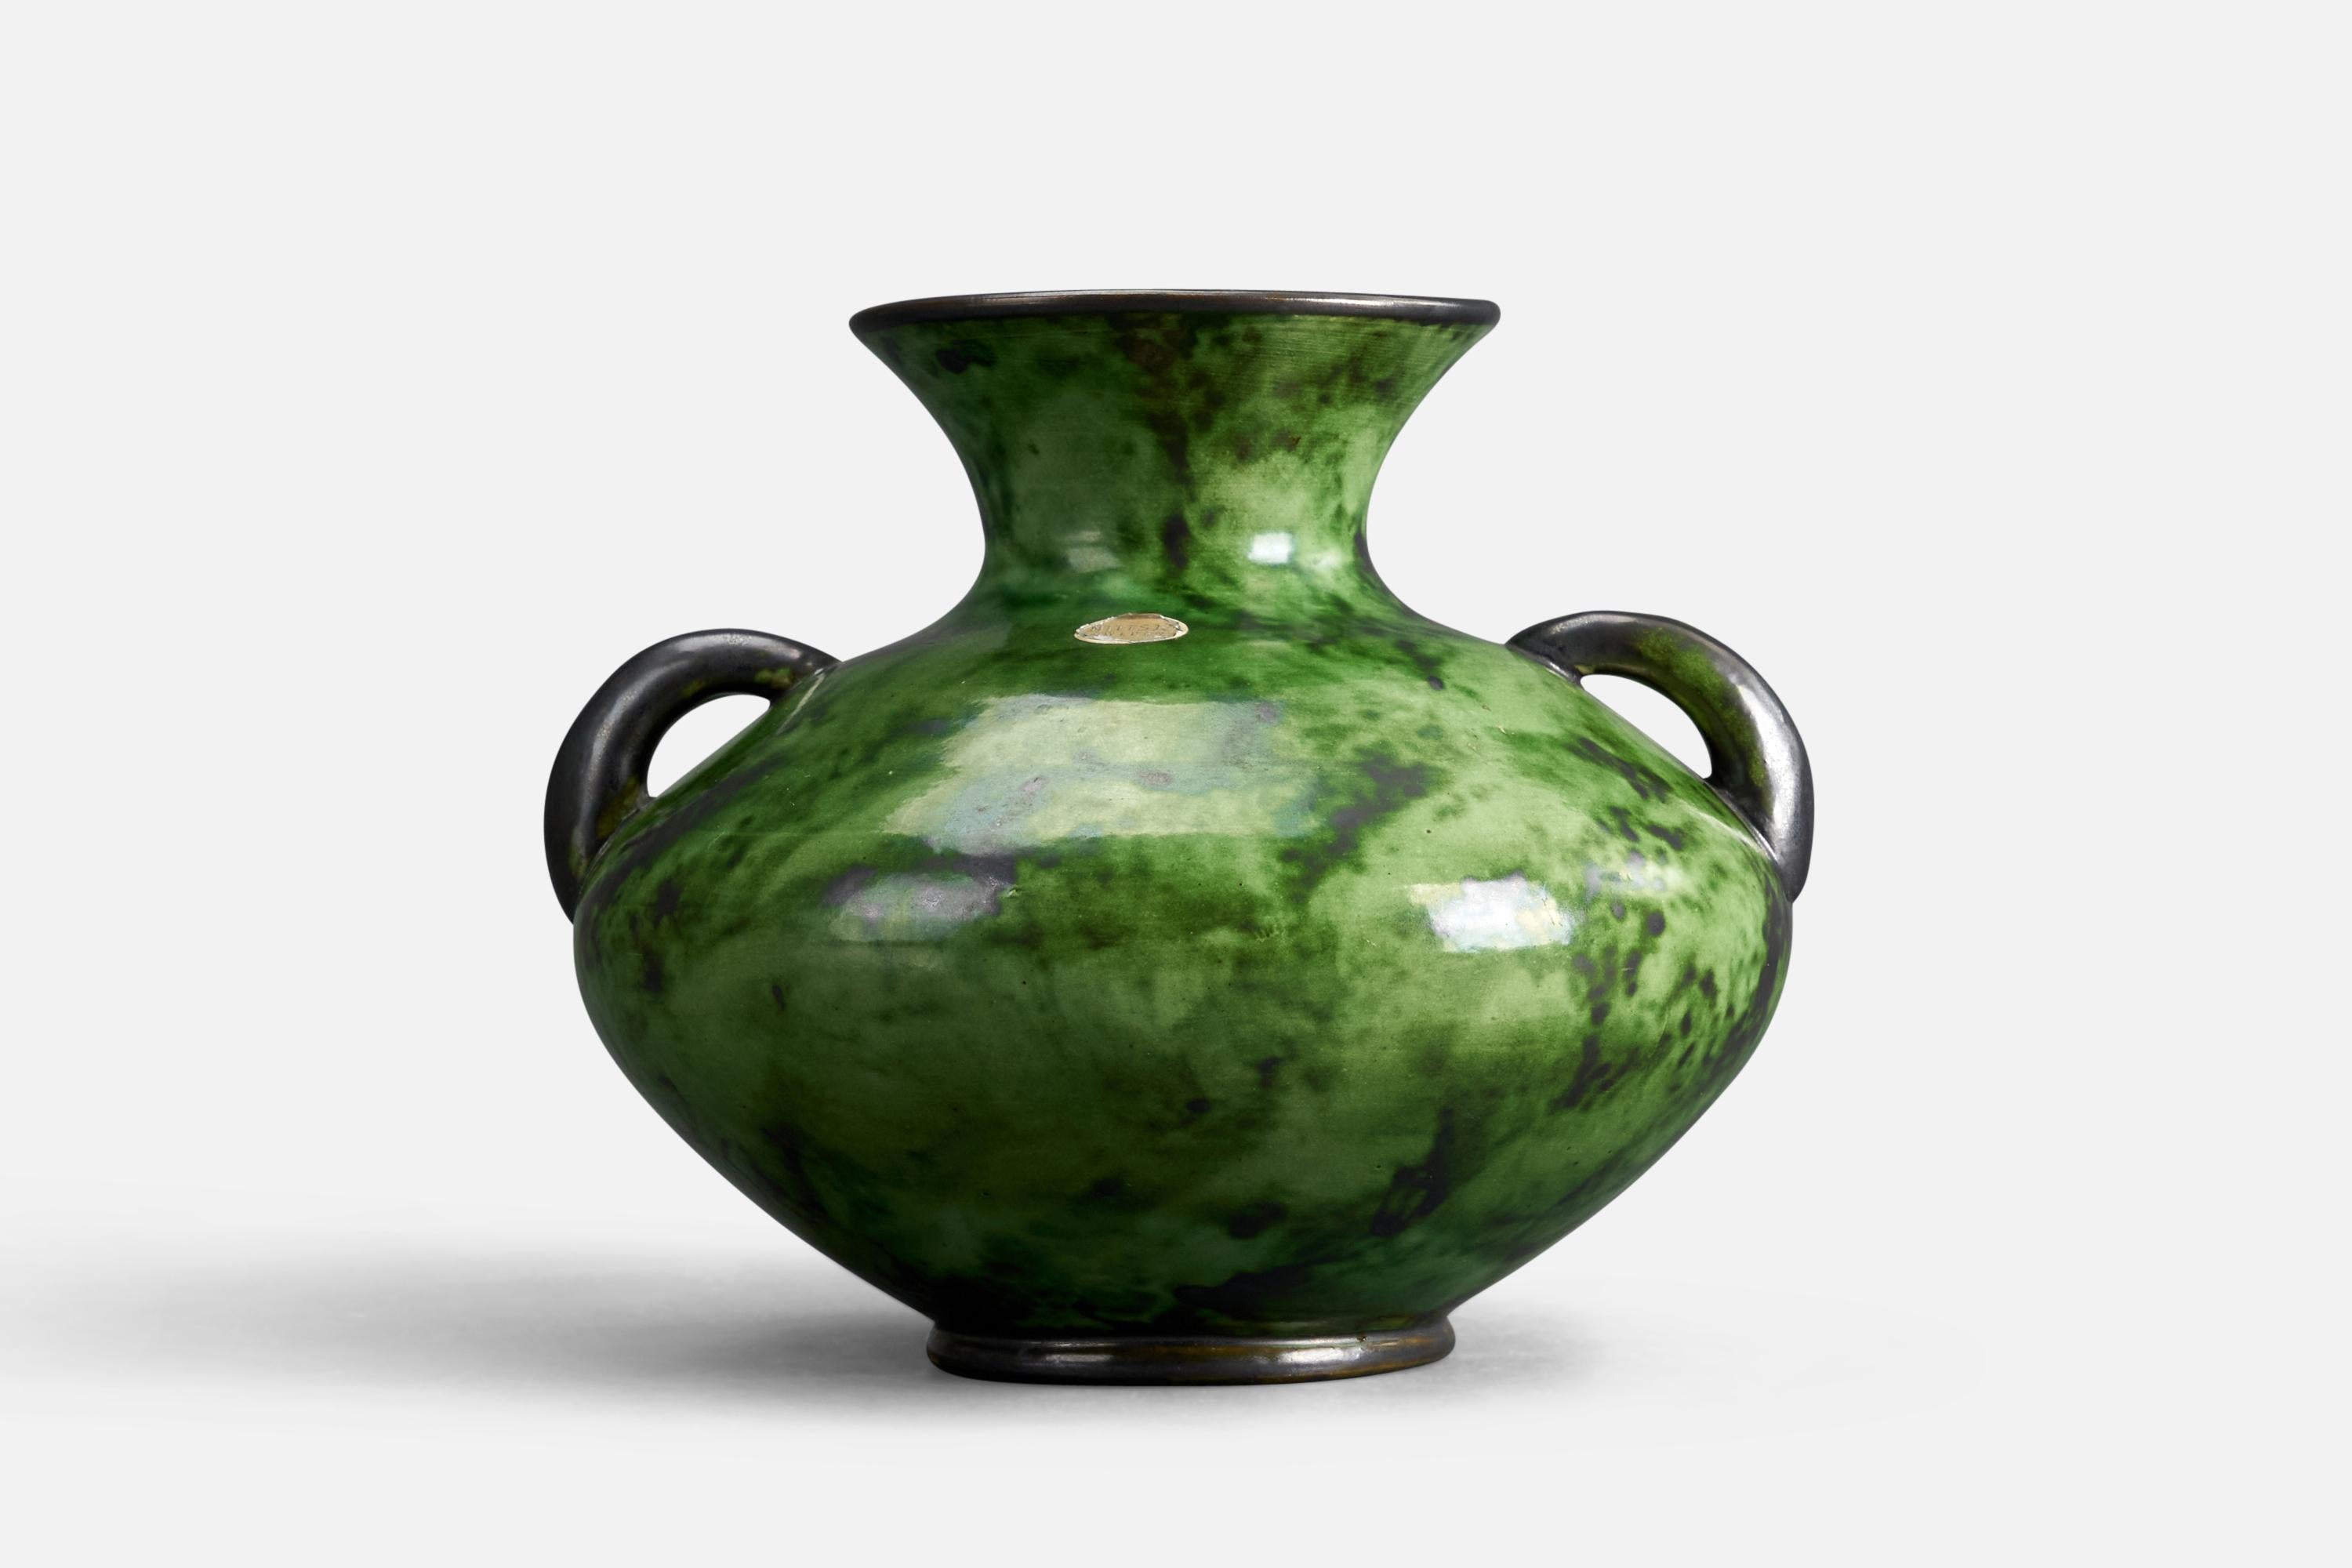 A earthenware vase designed by Erik Mornils and produced by Nittsjö, Sweden, 1940s.